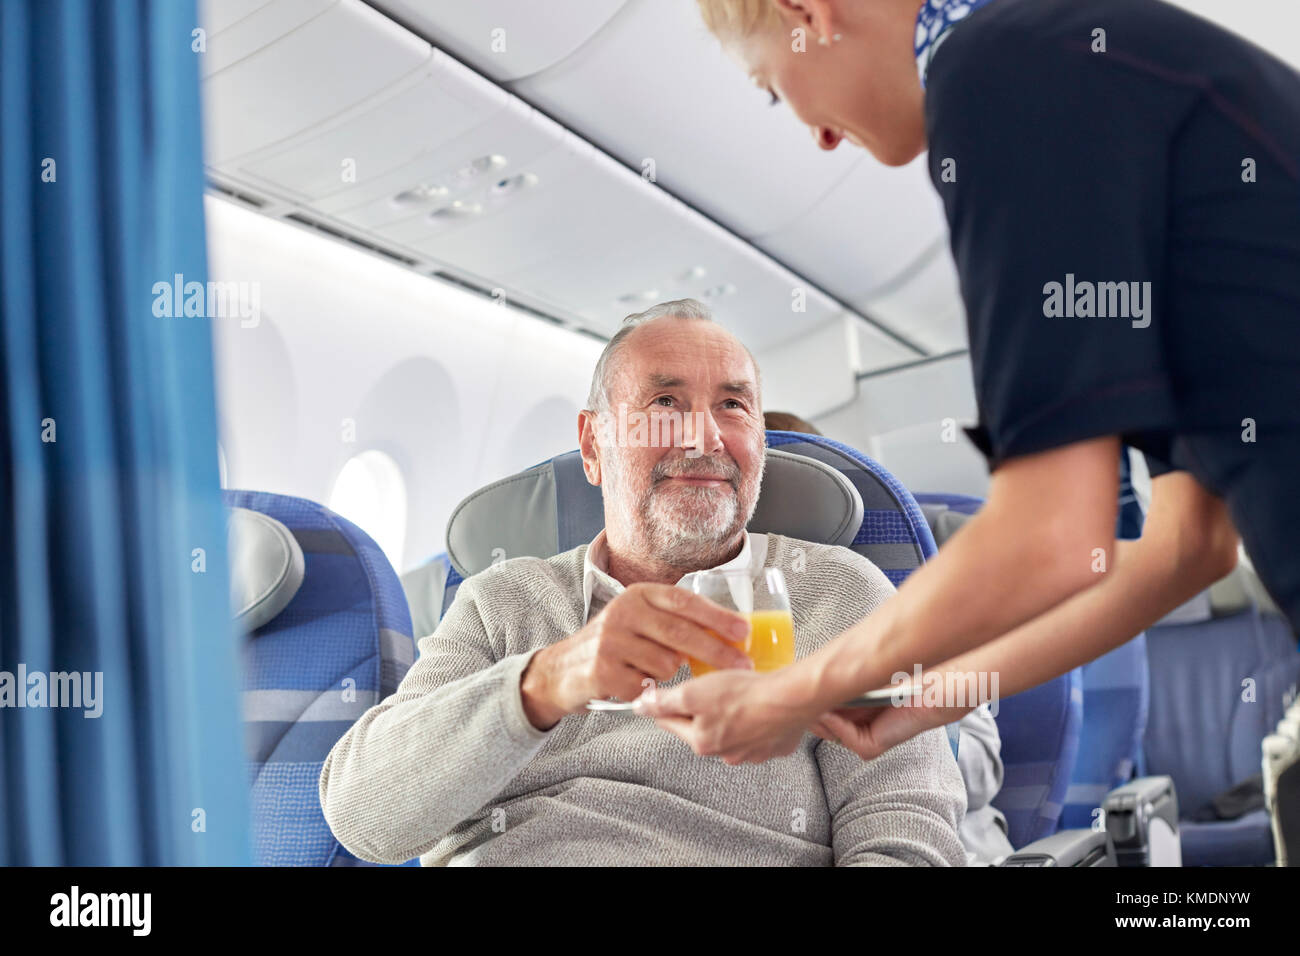 Flight attendant serving orange juice to man on airplane Stock Photo